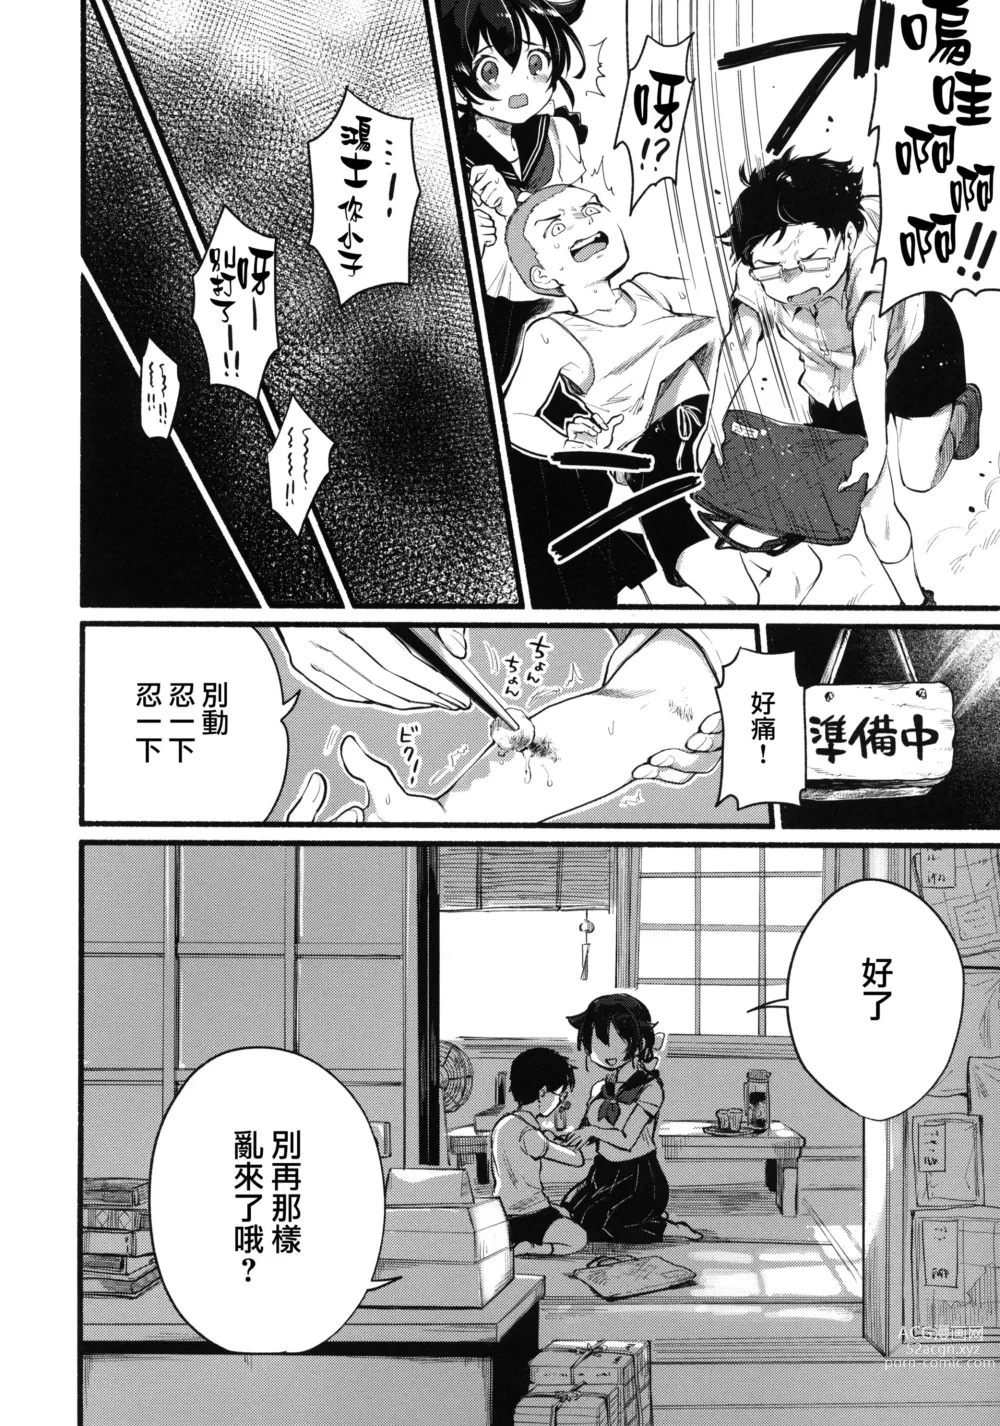 Page 7 of doujinshi 跟迅鯨姐姐度過暑假